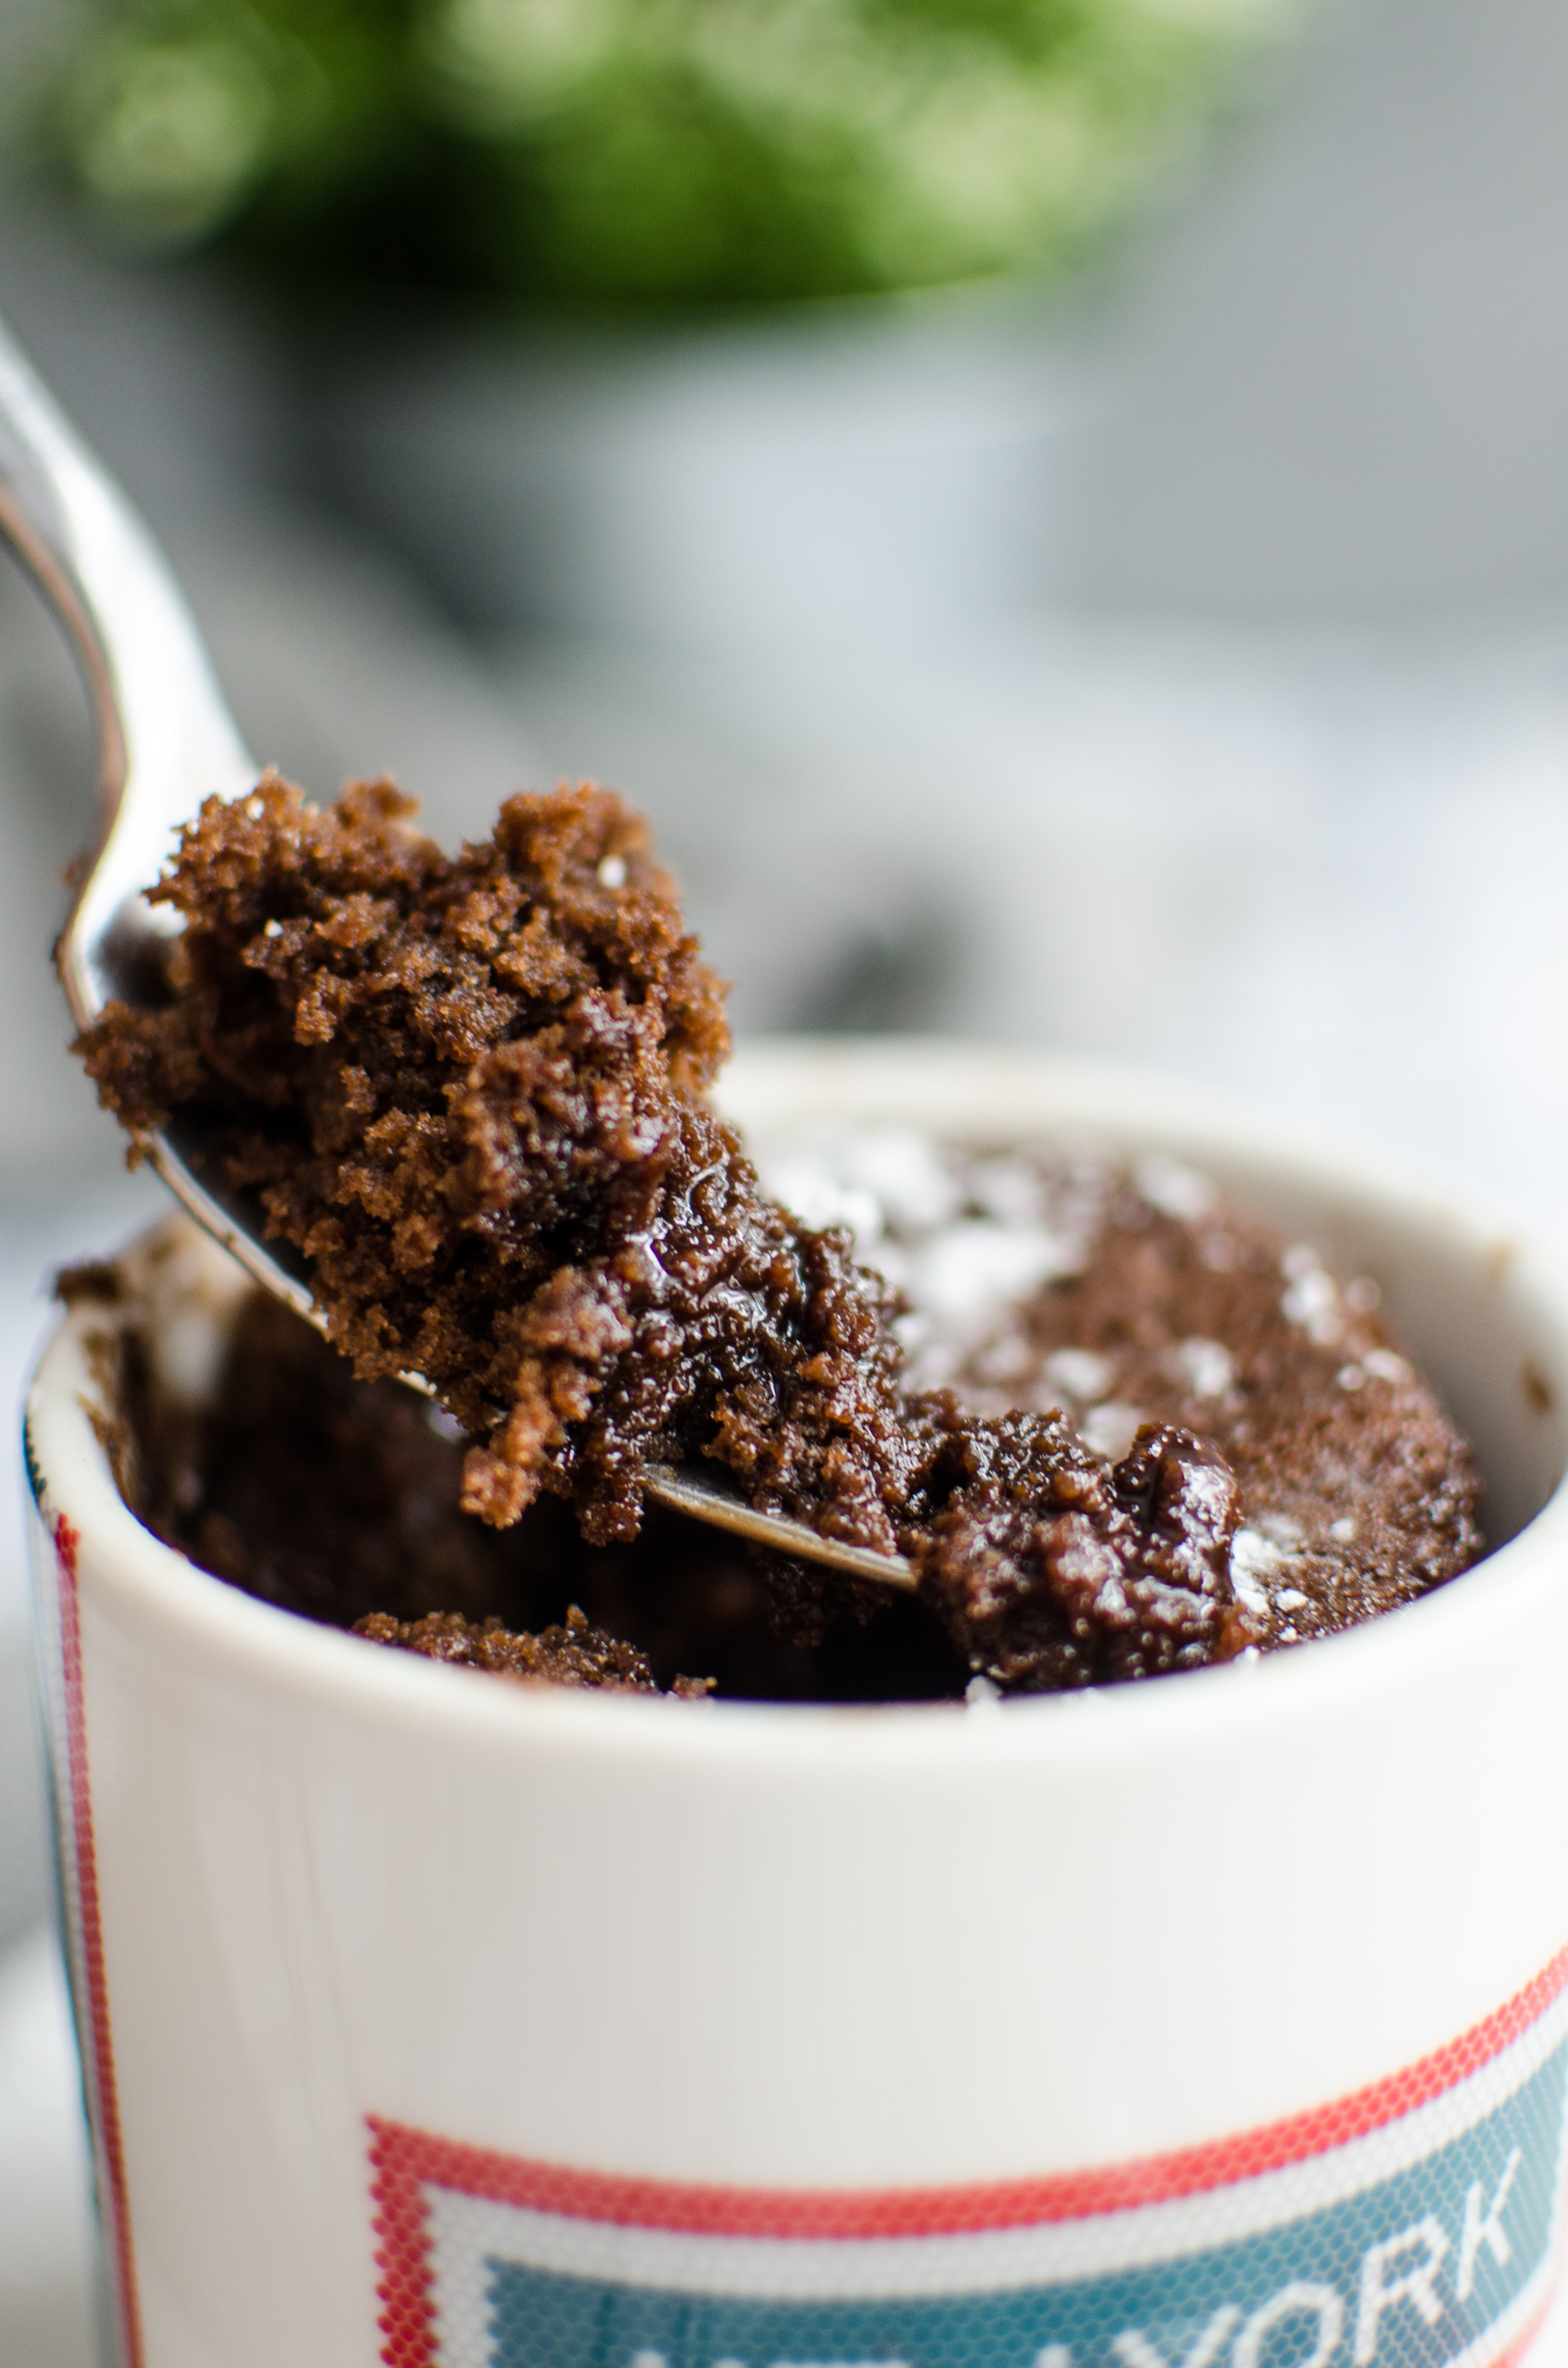 spoon with chocolate lava mug cake